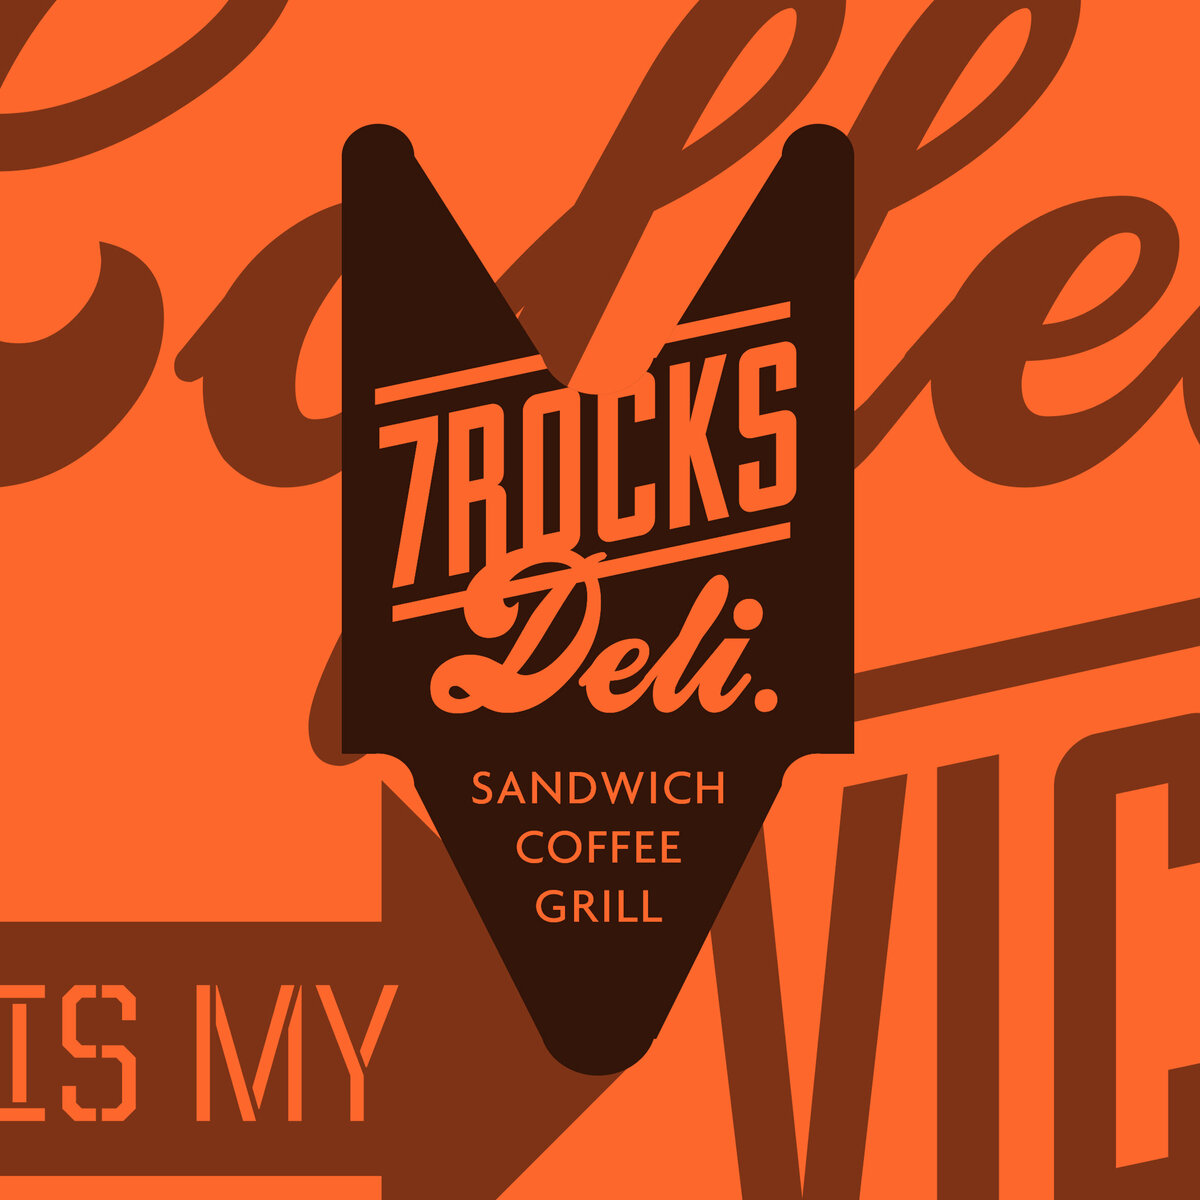 7 Rocks Cafe (Logo)